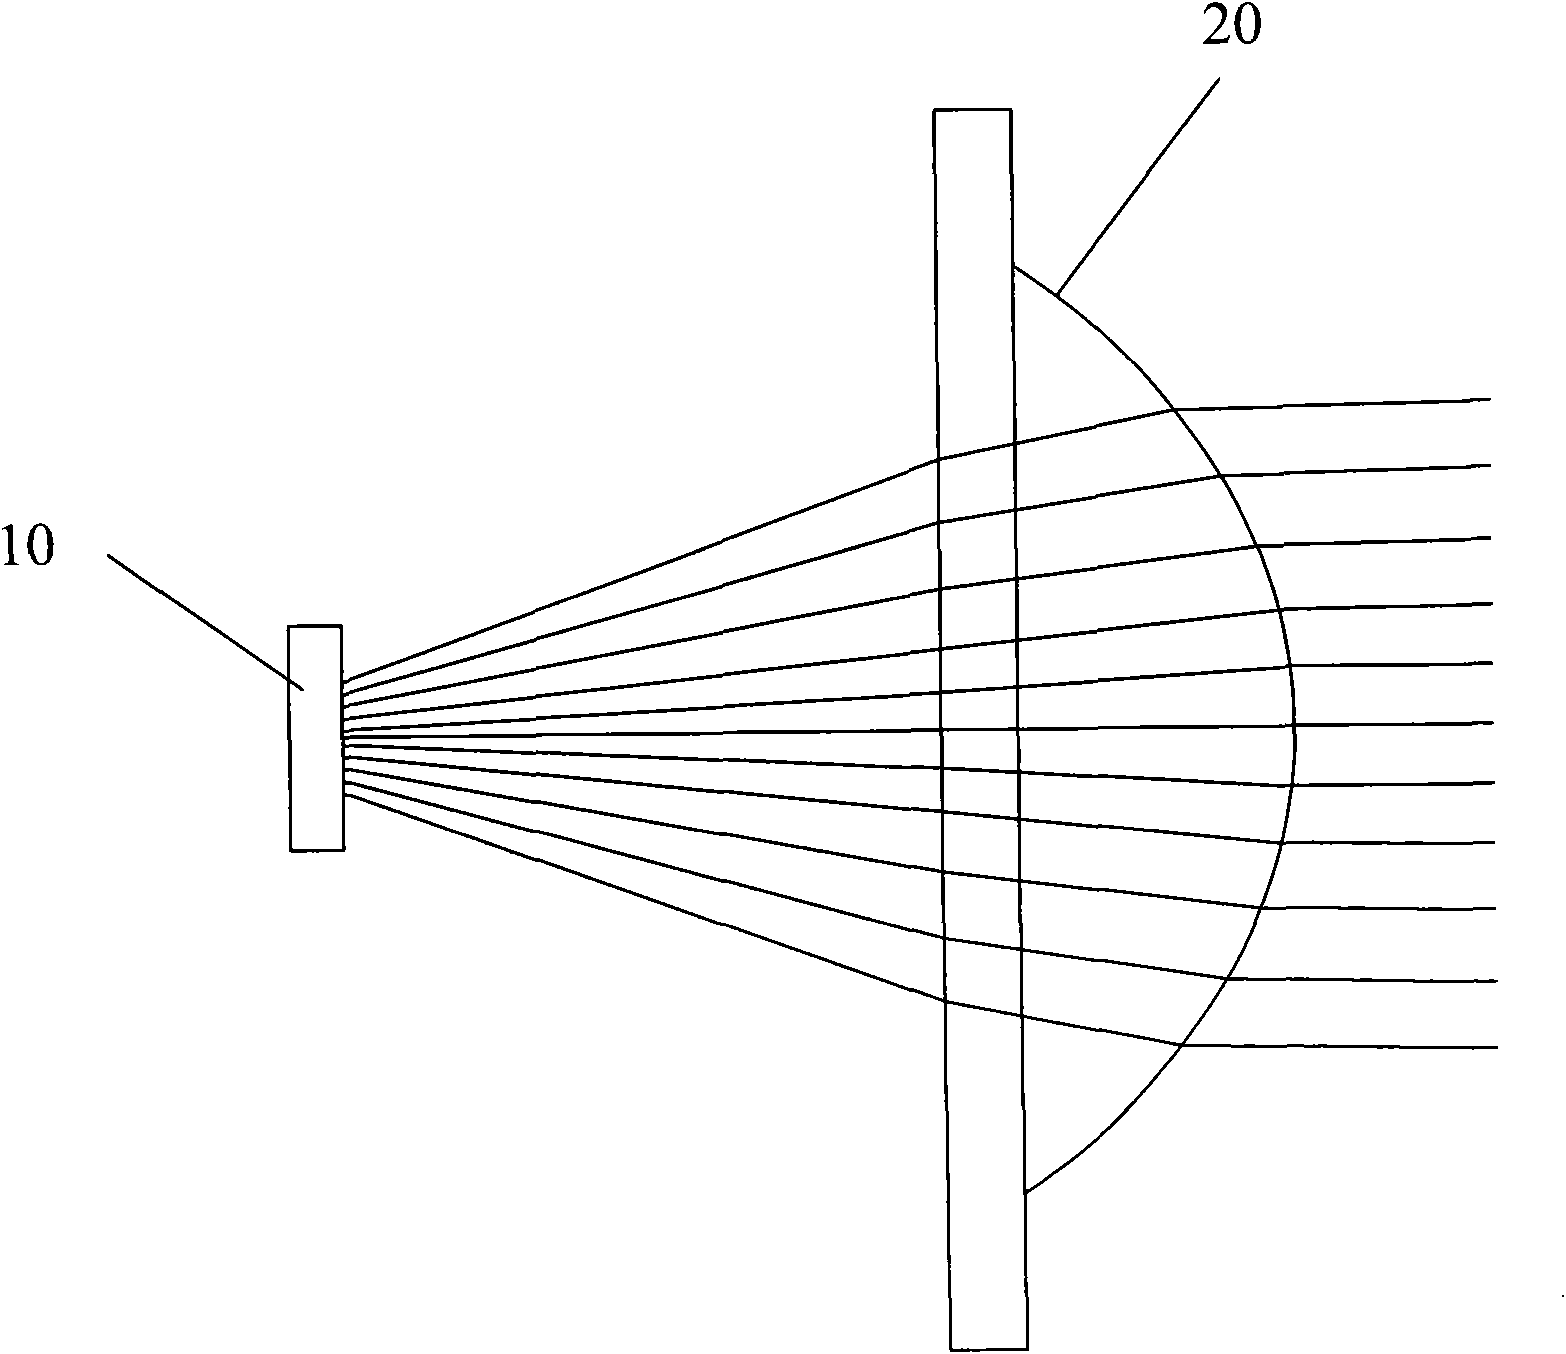 Optical illumination module